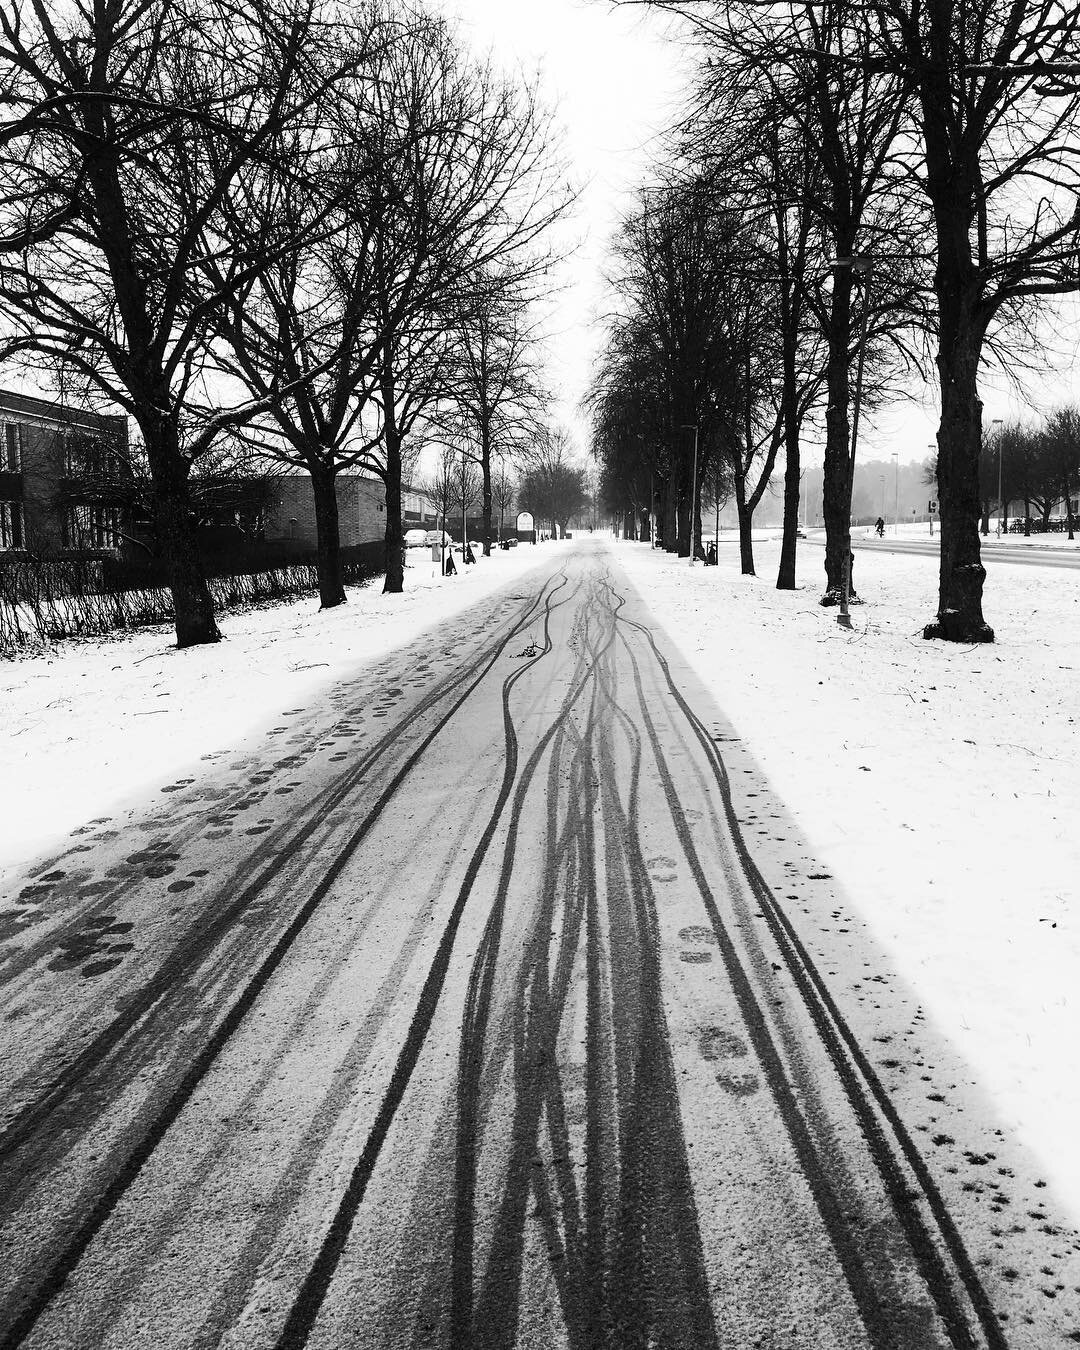 Criss cross
.
.
.
.
#iphoneonly #bnw #blackandwhite #snow #road #iphone #sweden #street